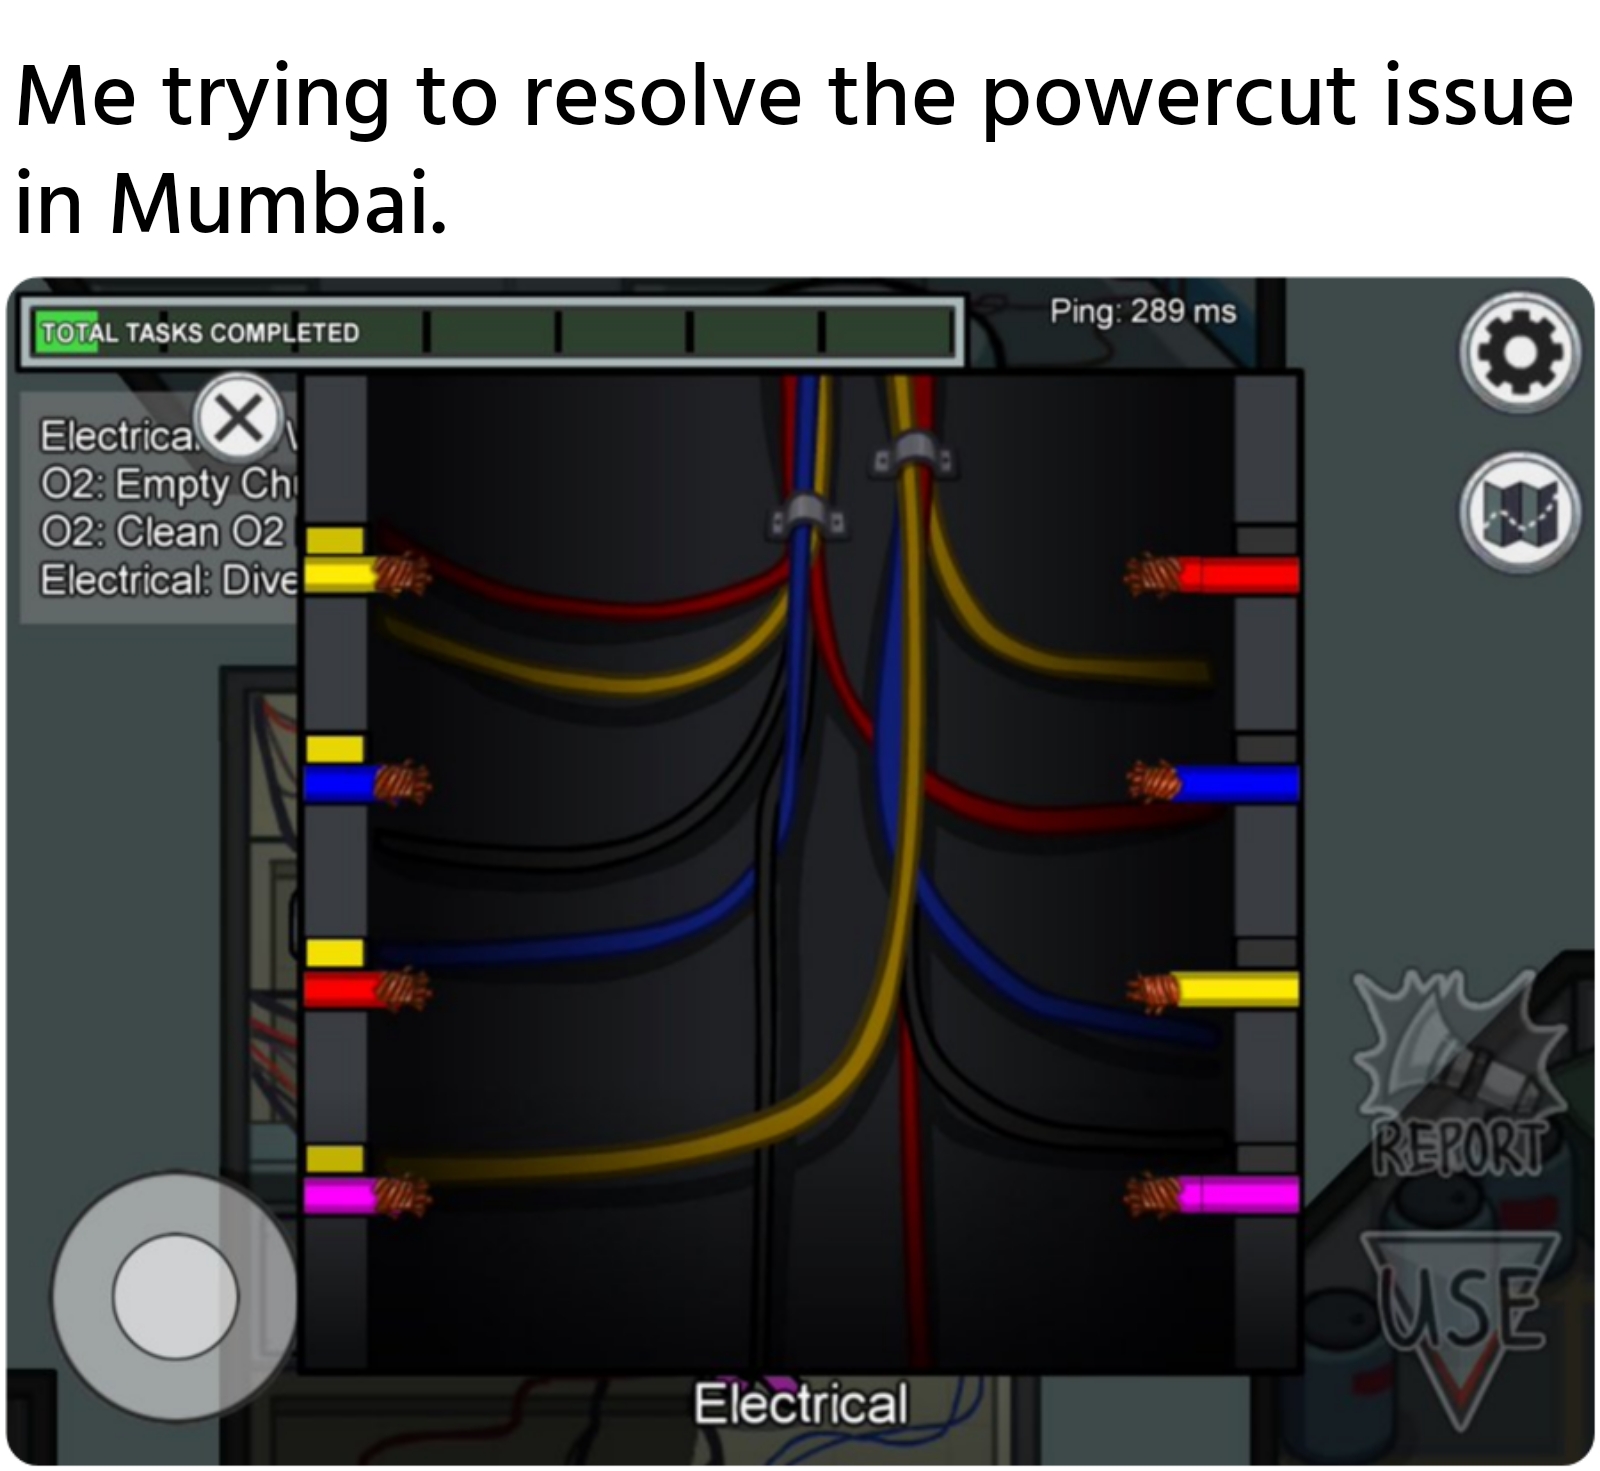 Me trying to resolve the powercut issue in Mumbai meme